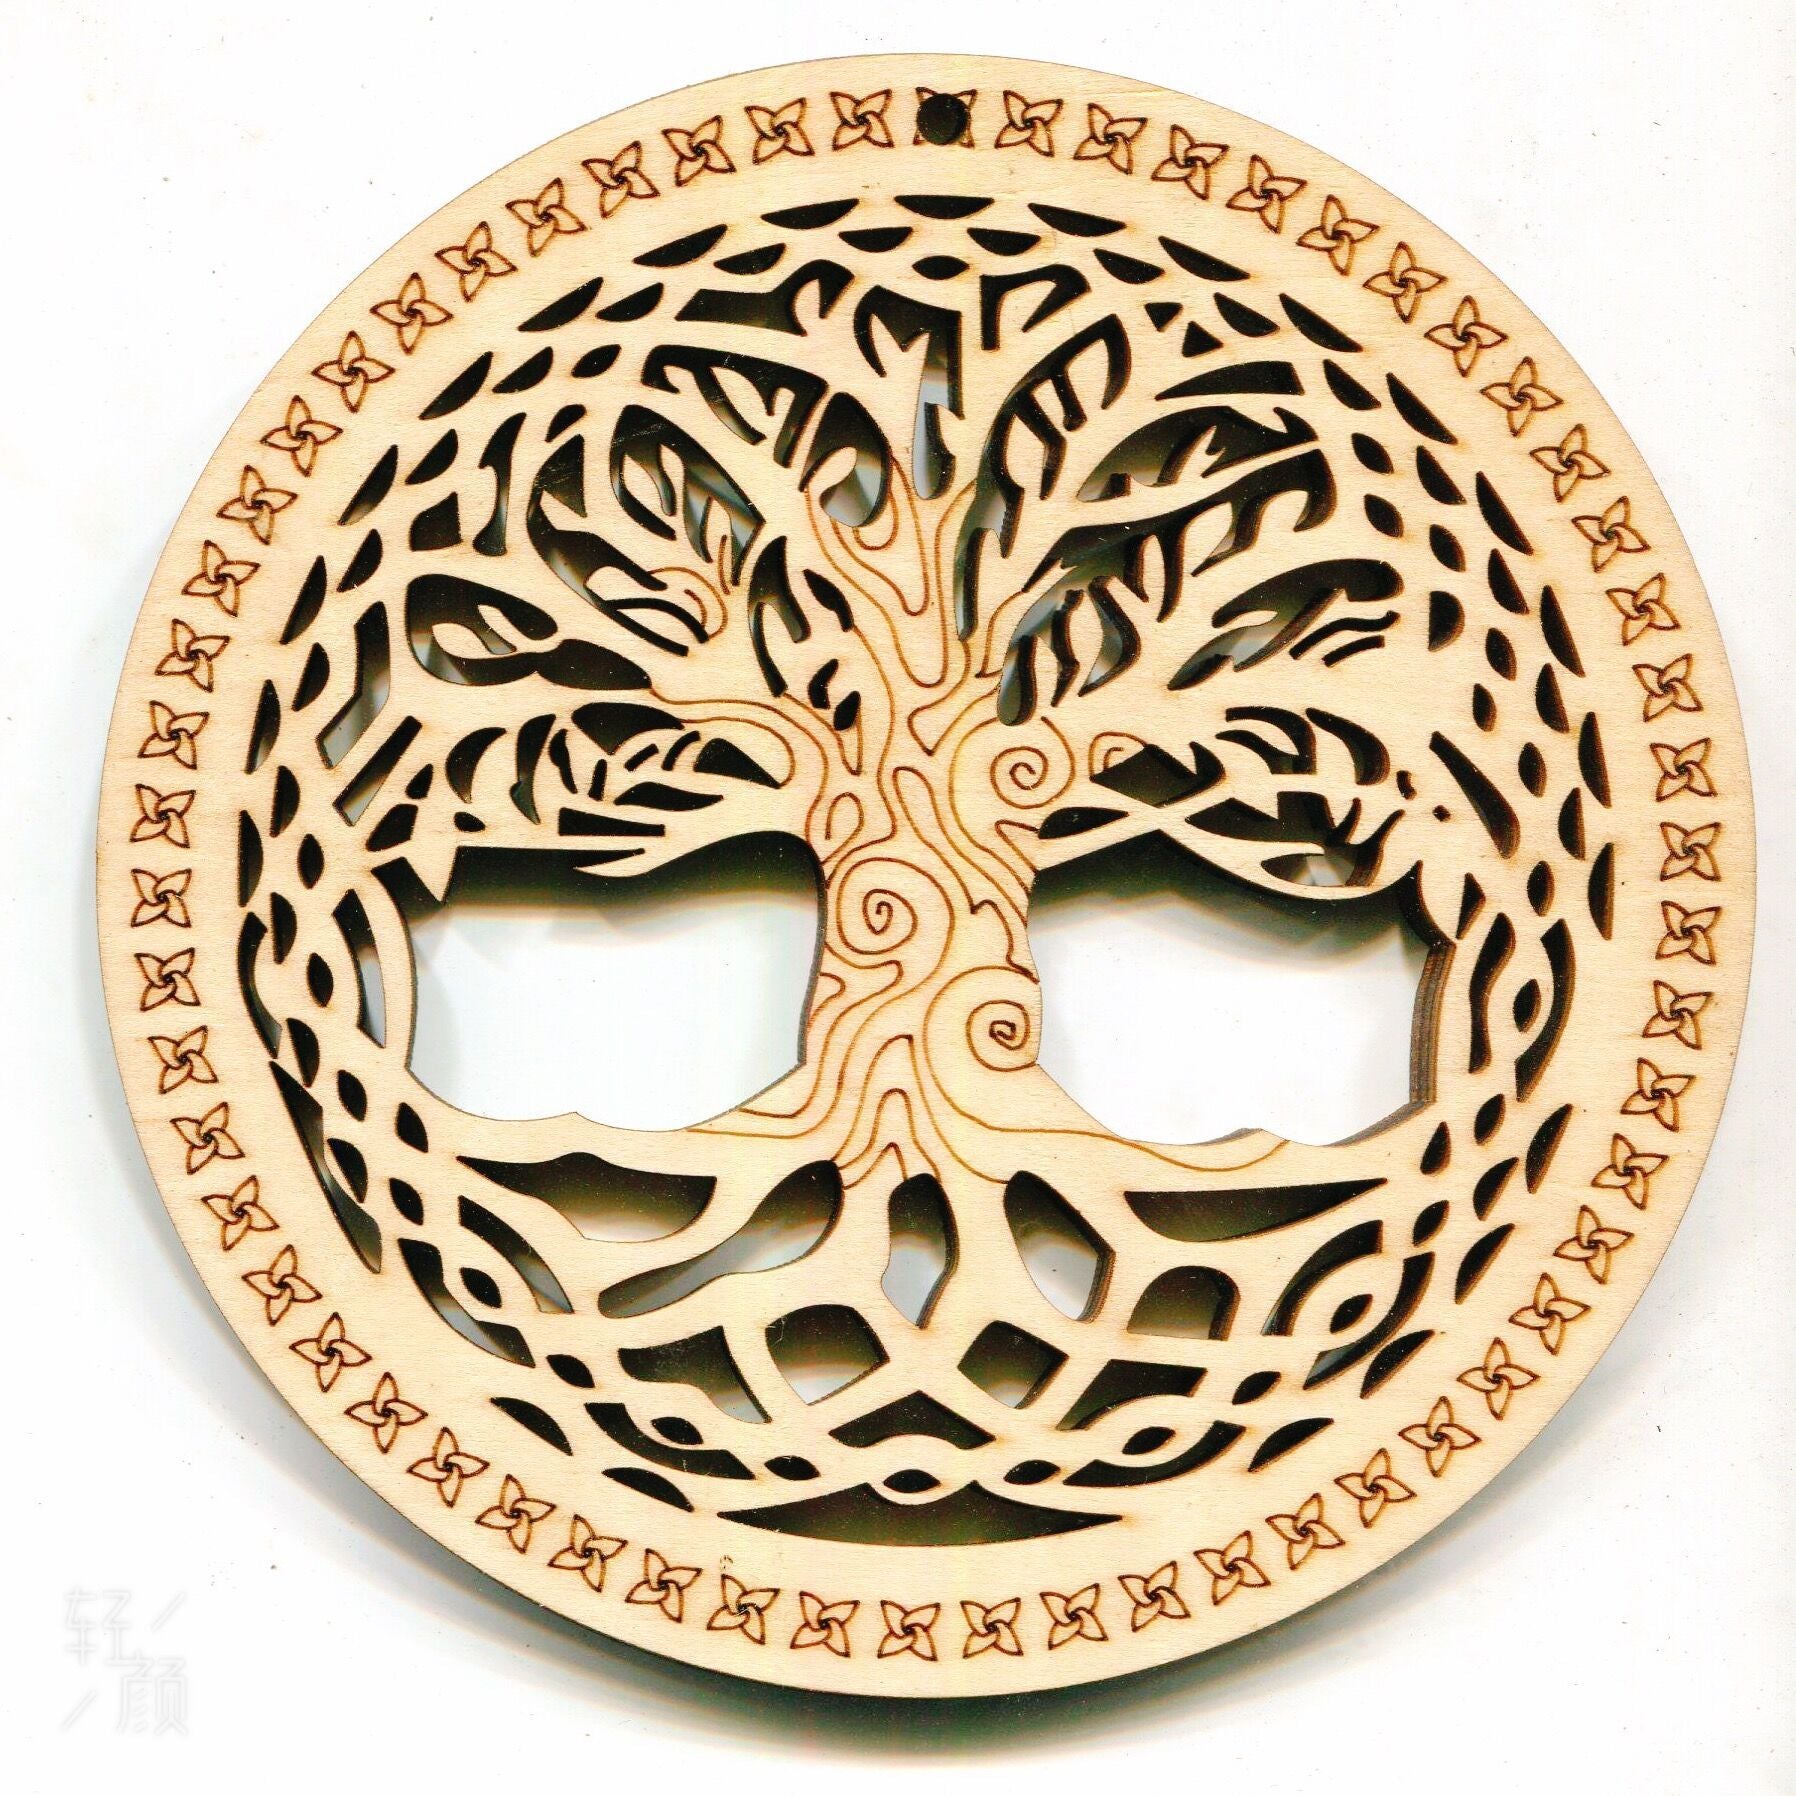 Mandala Wood Tree Of Life Symbol - Yoga and Zen Decor Yoga and Meditation Products - Personal Hour